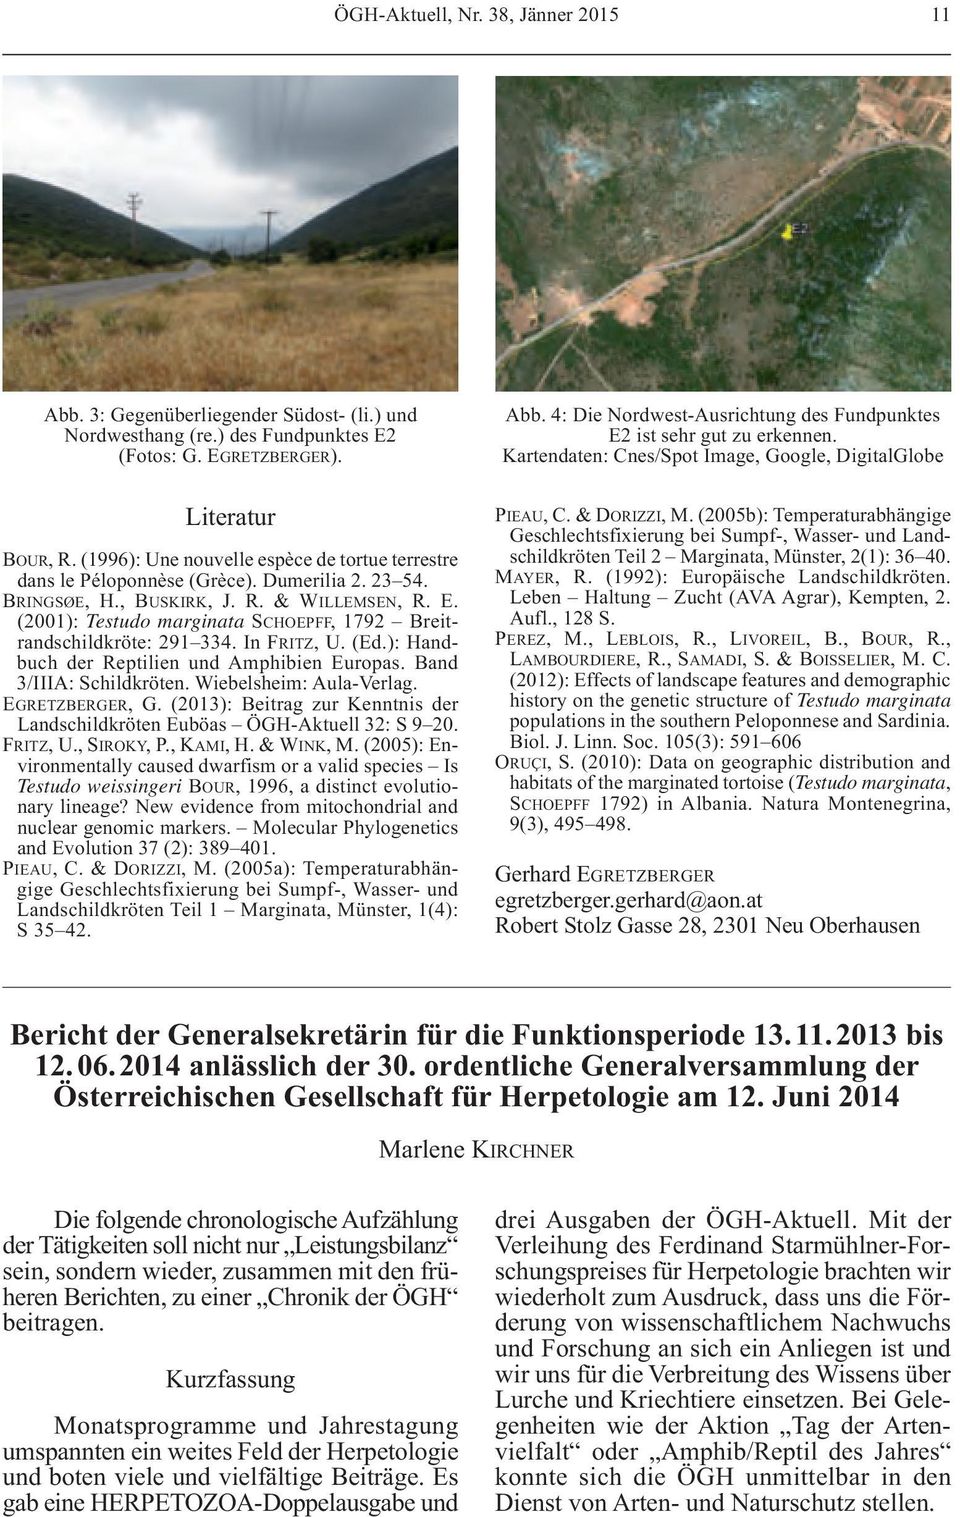 In fritz, U. (ed.): Handbuch der reptilien und amphibien europas. Band 3/IIIa: Schildkröten. Wiebelsheim: aula-verlag. egretzberger, G.